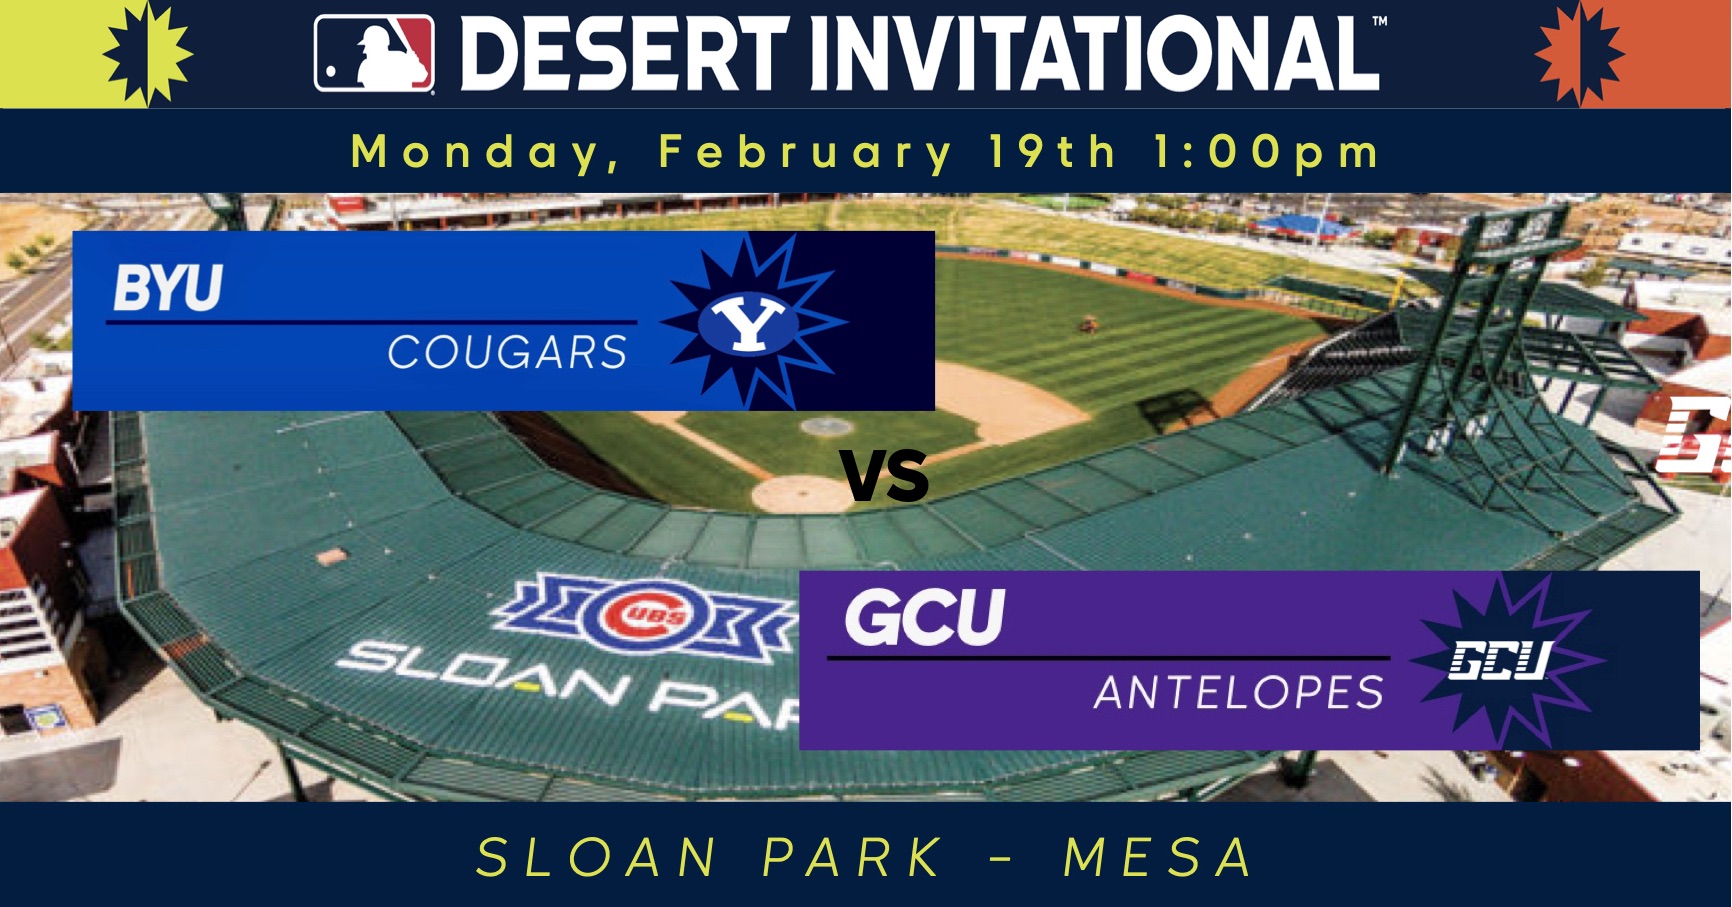 BYU vs. GCU Sloan Park MLB Desert Invitational Brushfire